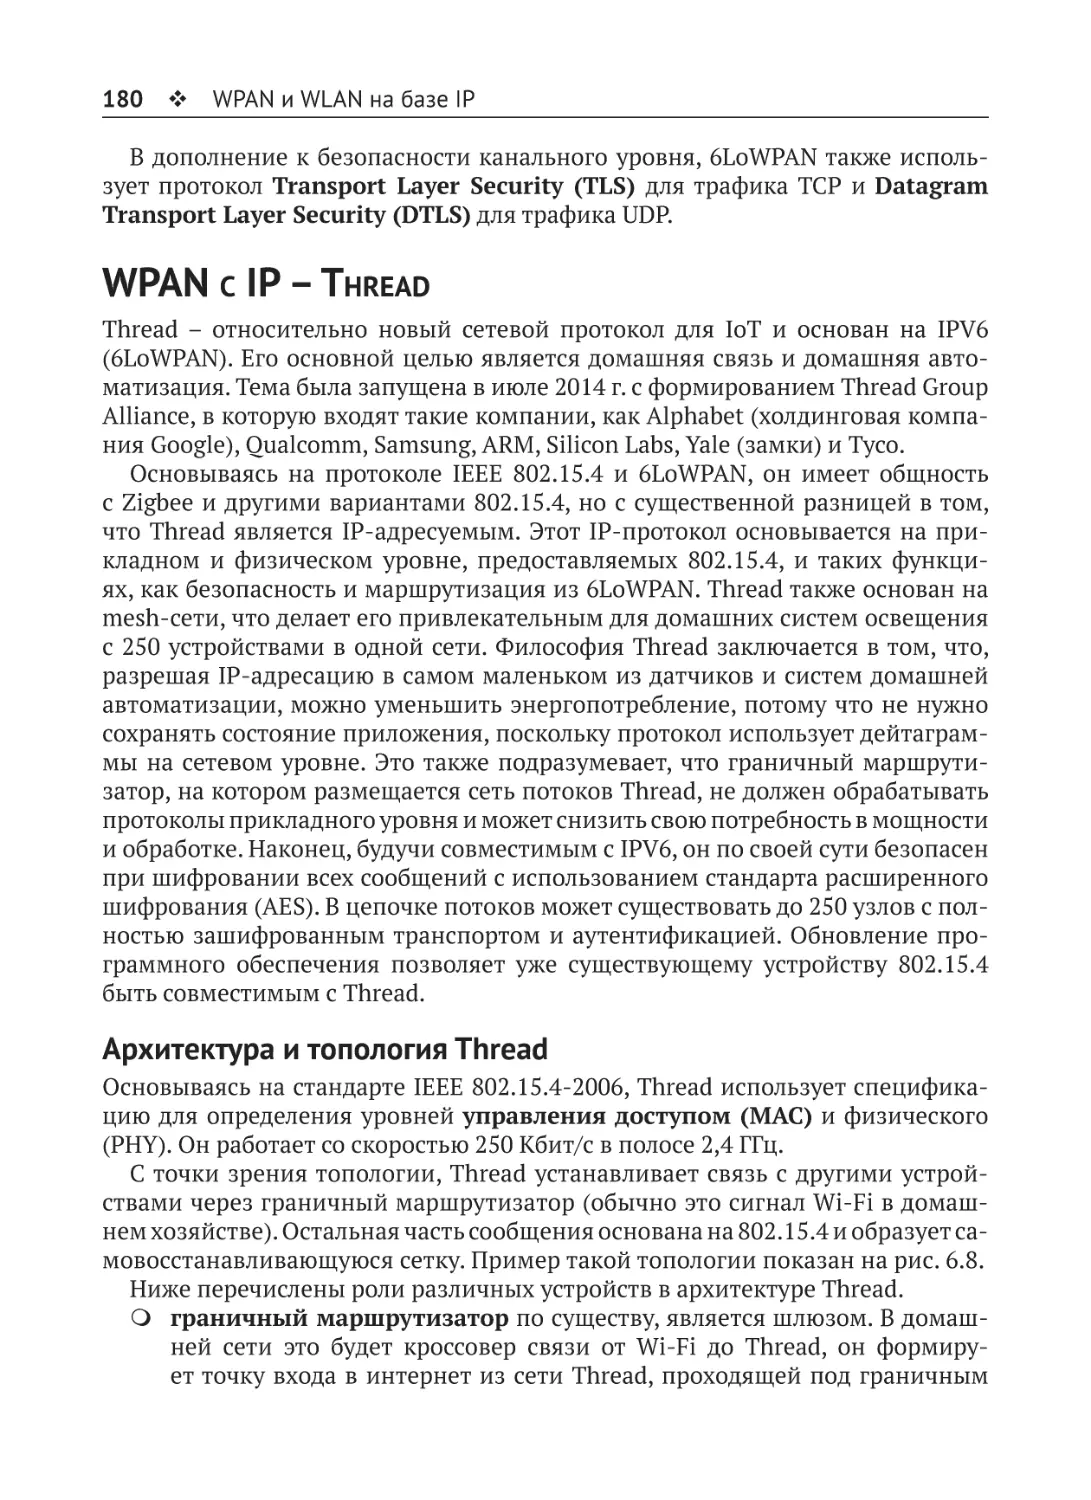 WPAN с IP – Thread
Архитектура и топология Thread